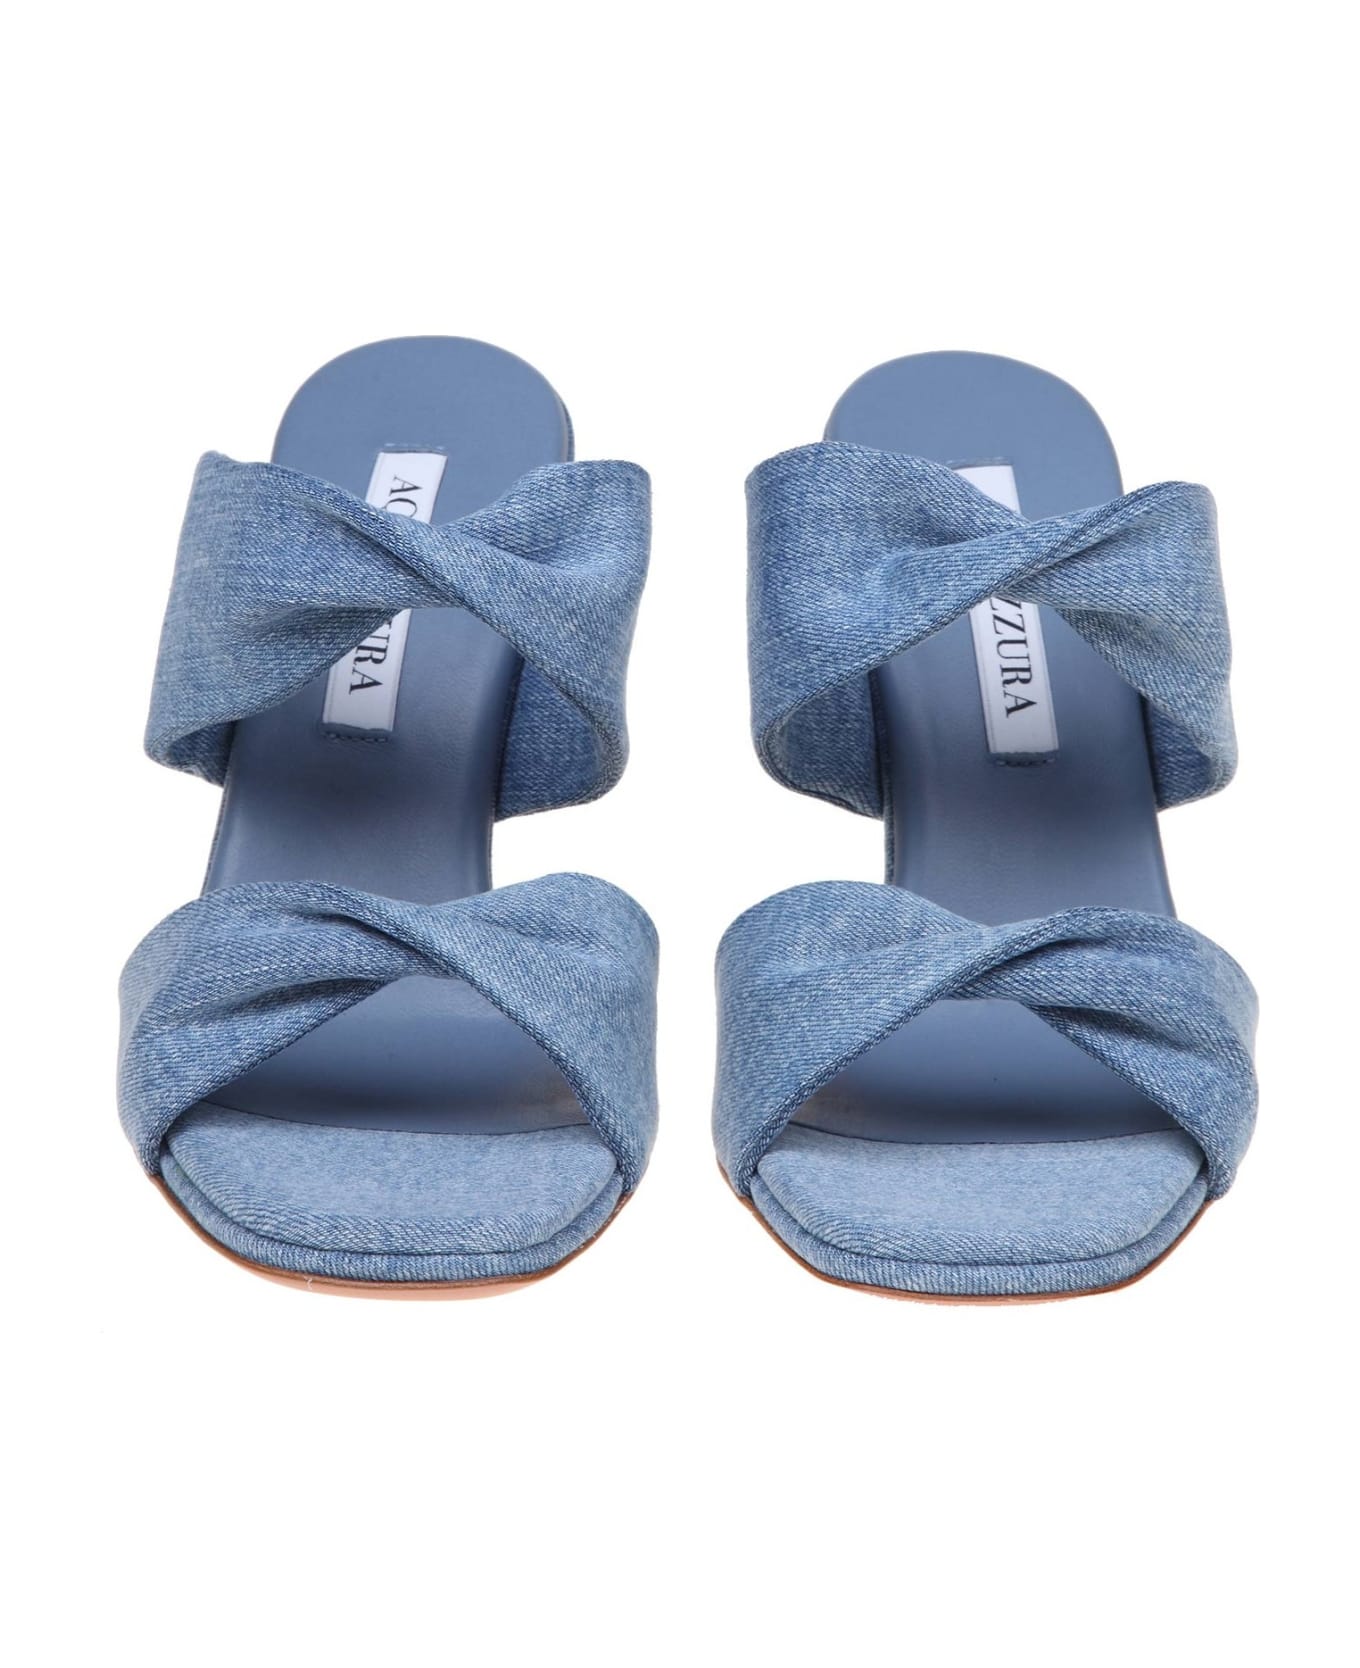 Aquazzura Twist 95 Sandal In Denim Fabric - Light blue サンダル